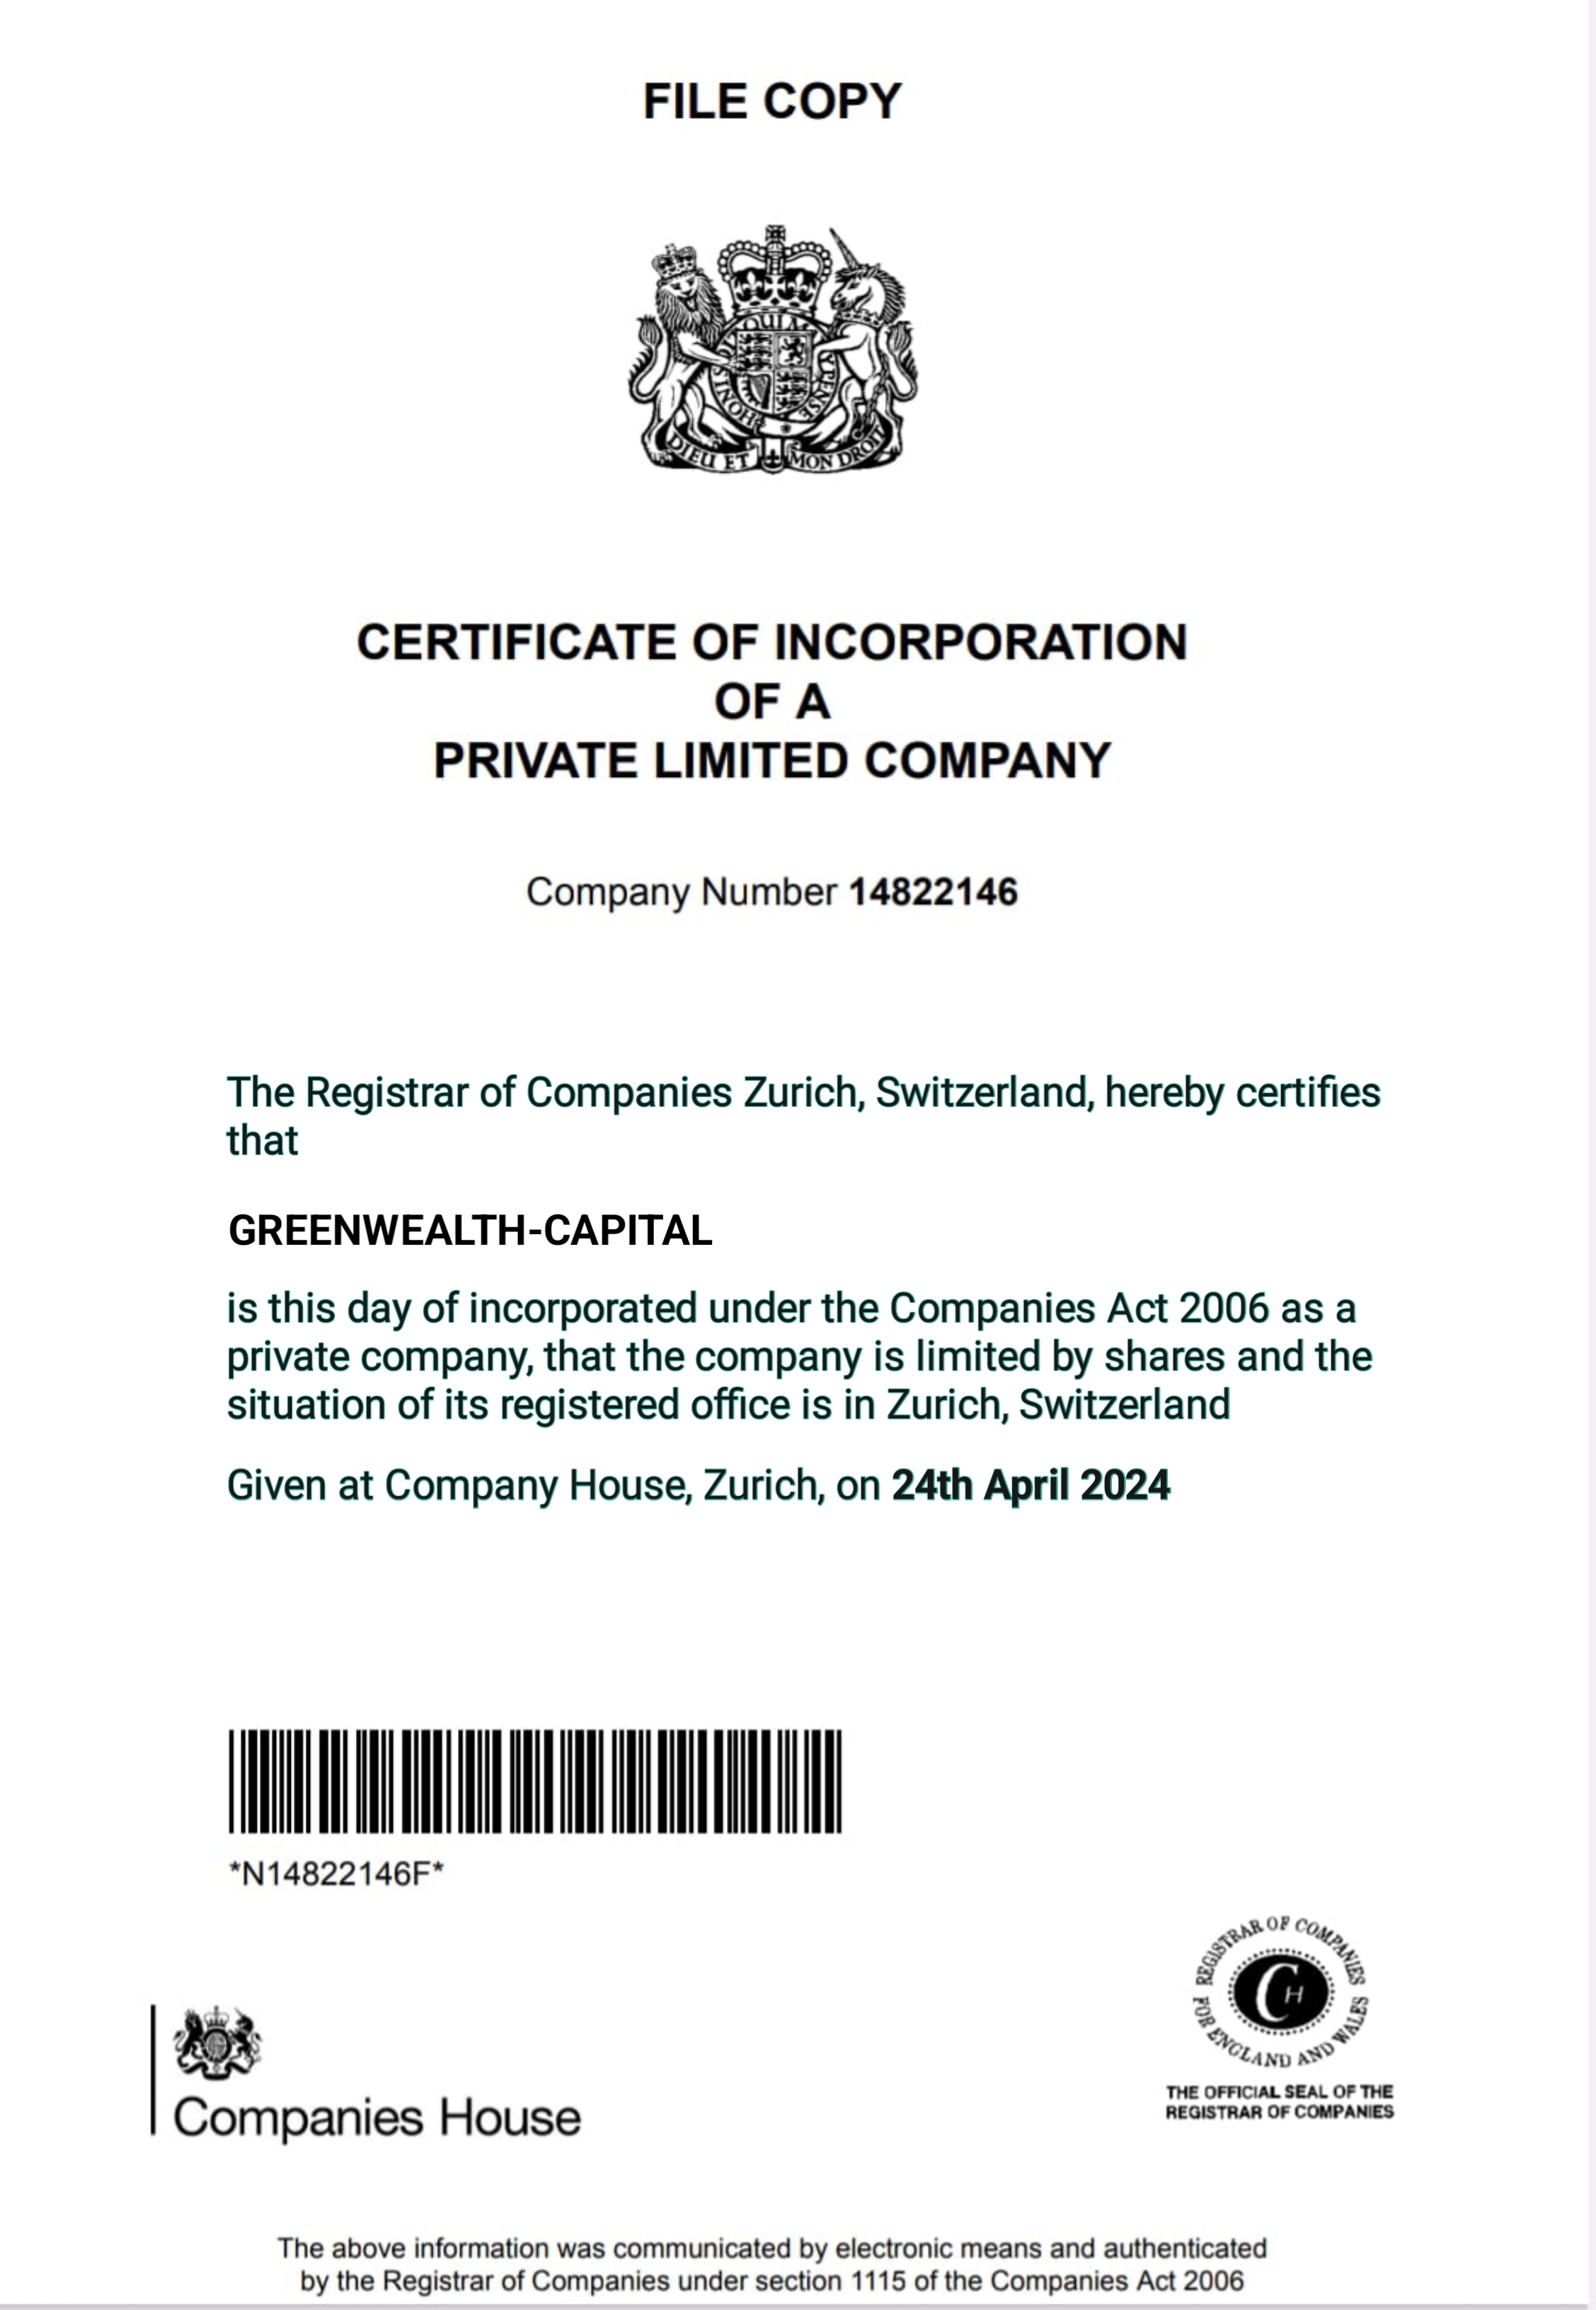 greenwealth-capital.com  certificate